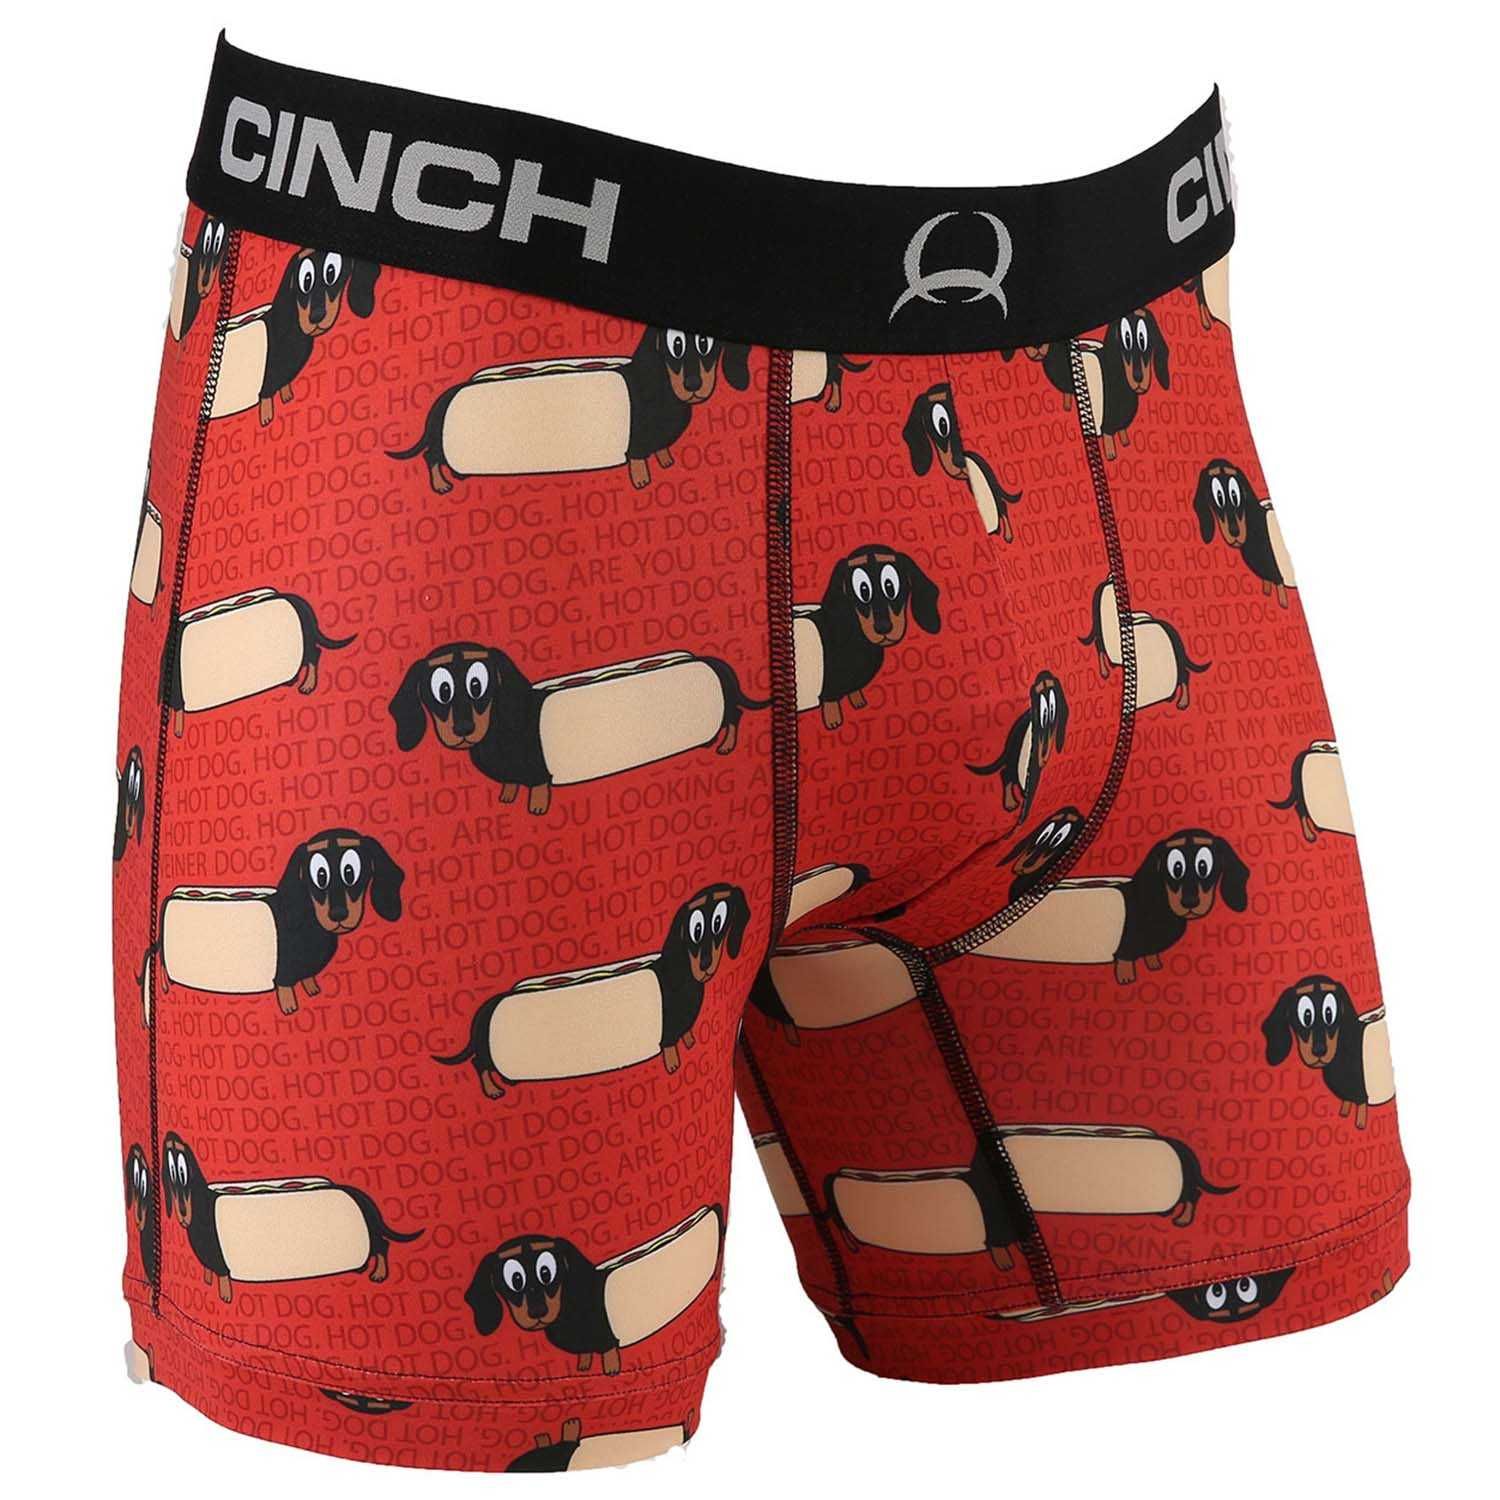 https://www.pfiwestern.com/media/catalog/product/cache/12946f501fb8eea9b0b25f6c3c116ad9/image/1186532d3/cinch-mens-arenaflex-weiner-dog-boxer-briefs.jpg